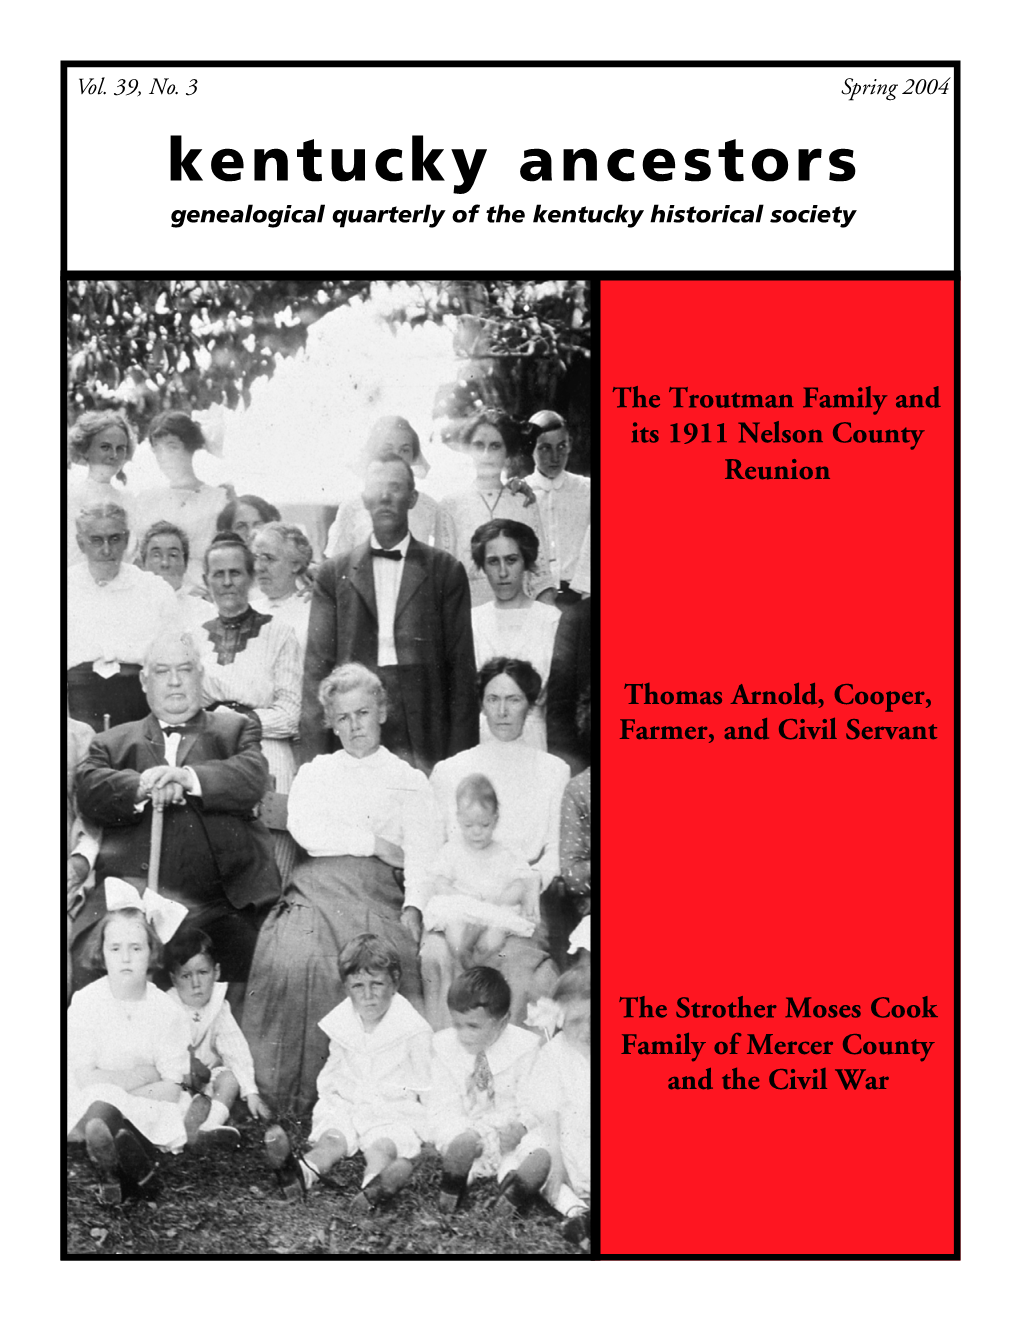 Kentucky Ancestors Genealogical Quarterly of the Kentucky Historical Society